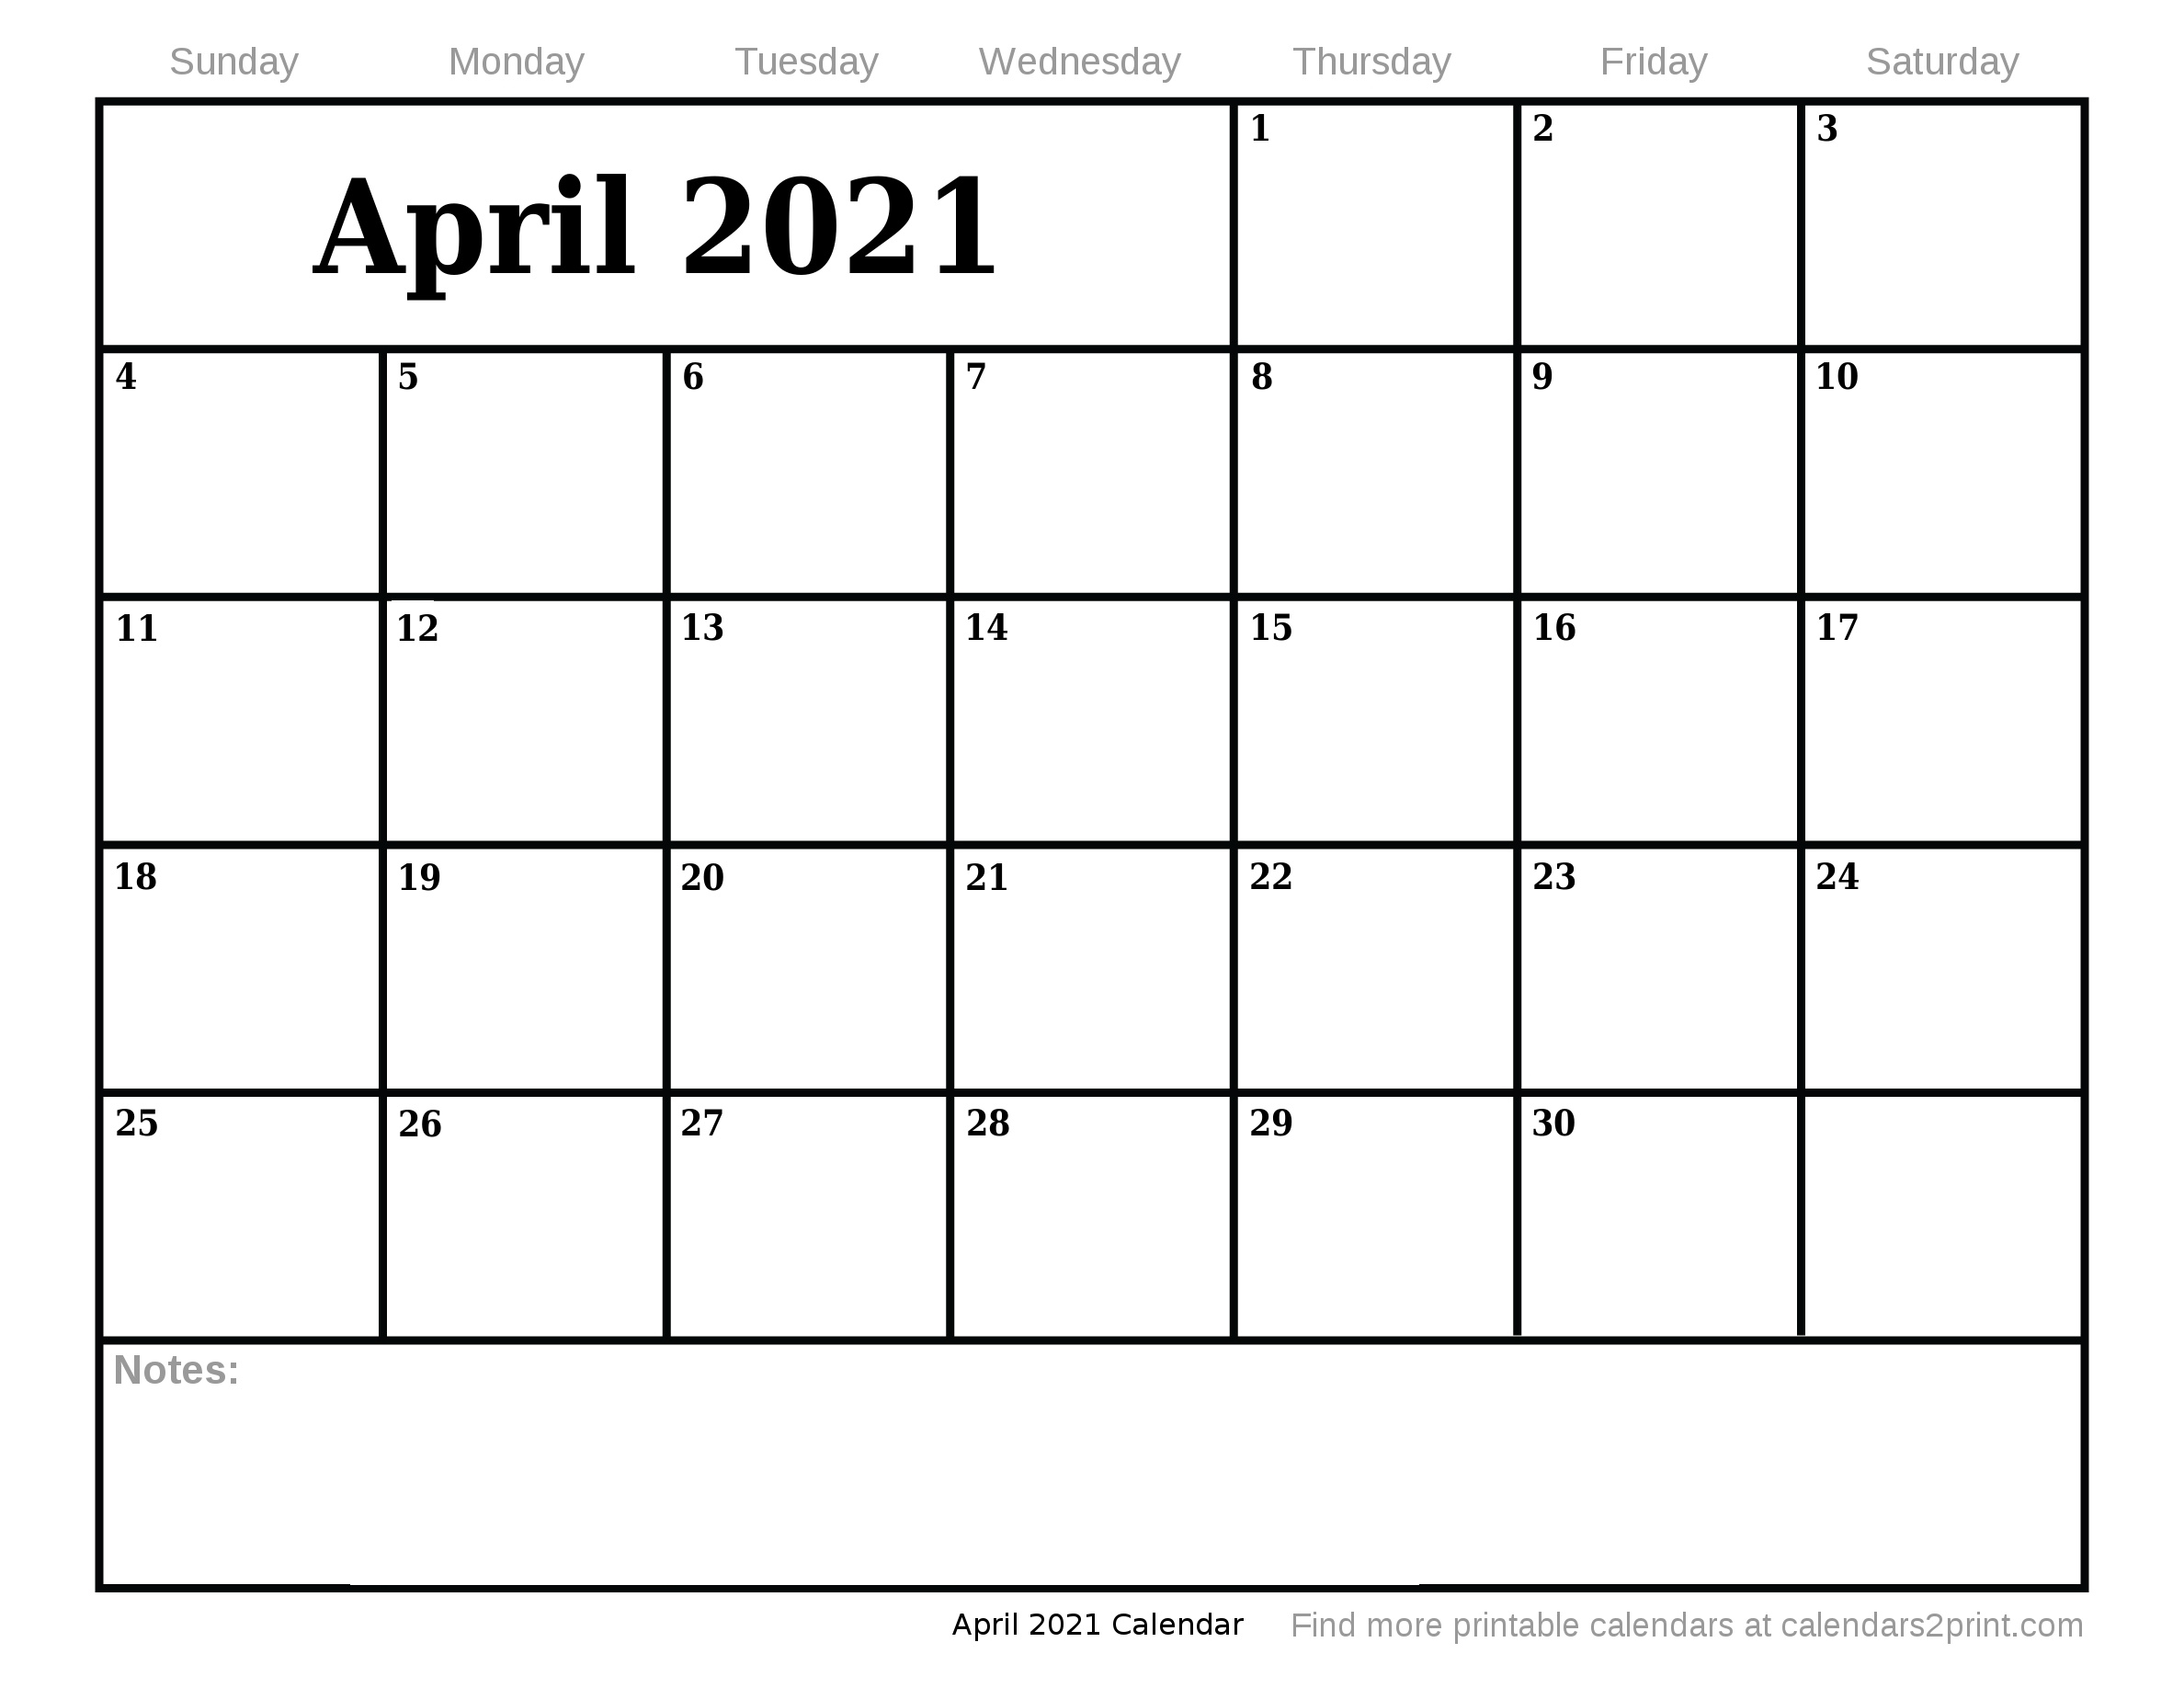 Apr 2021 Printable Calendar